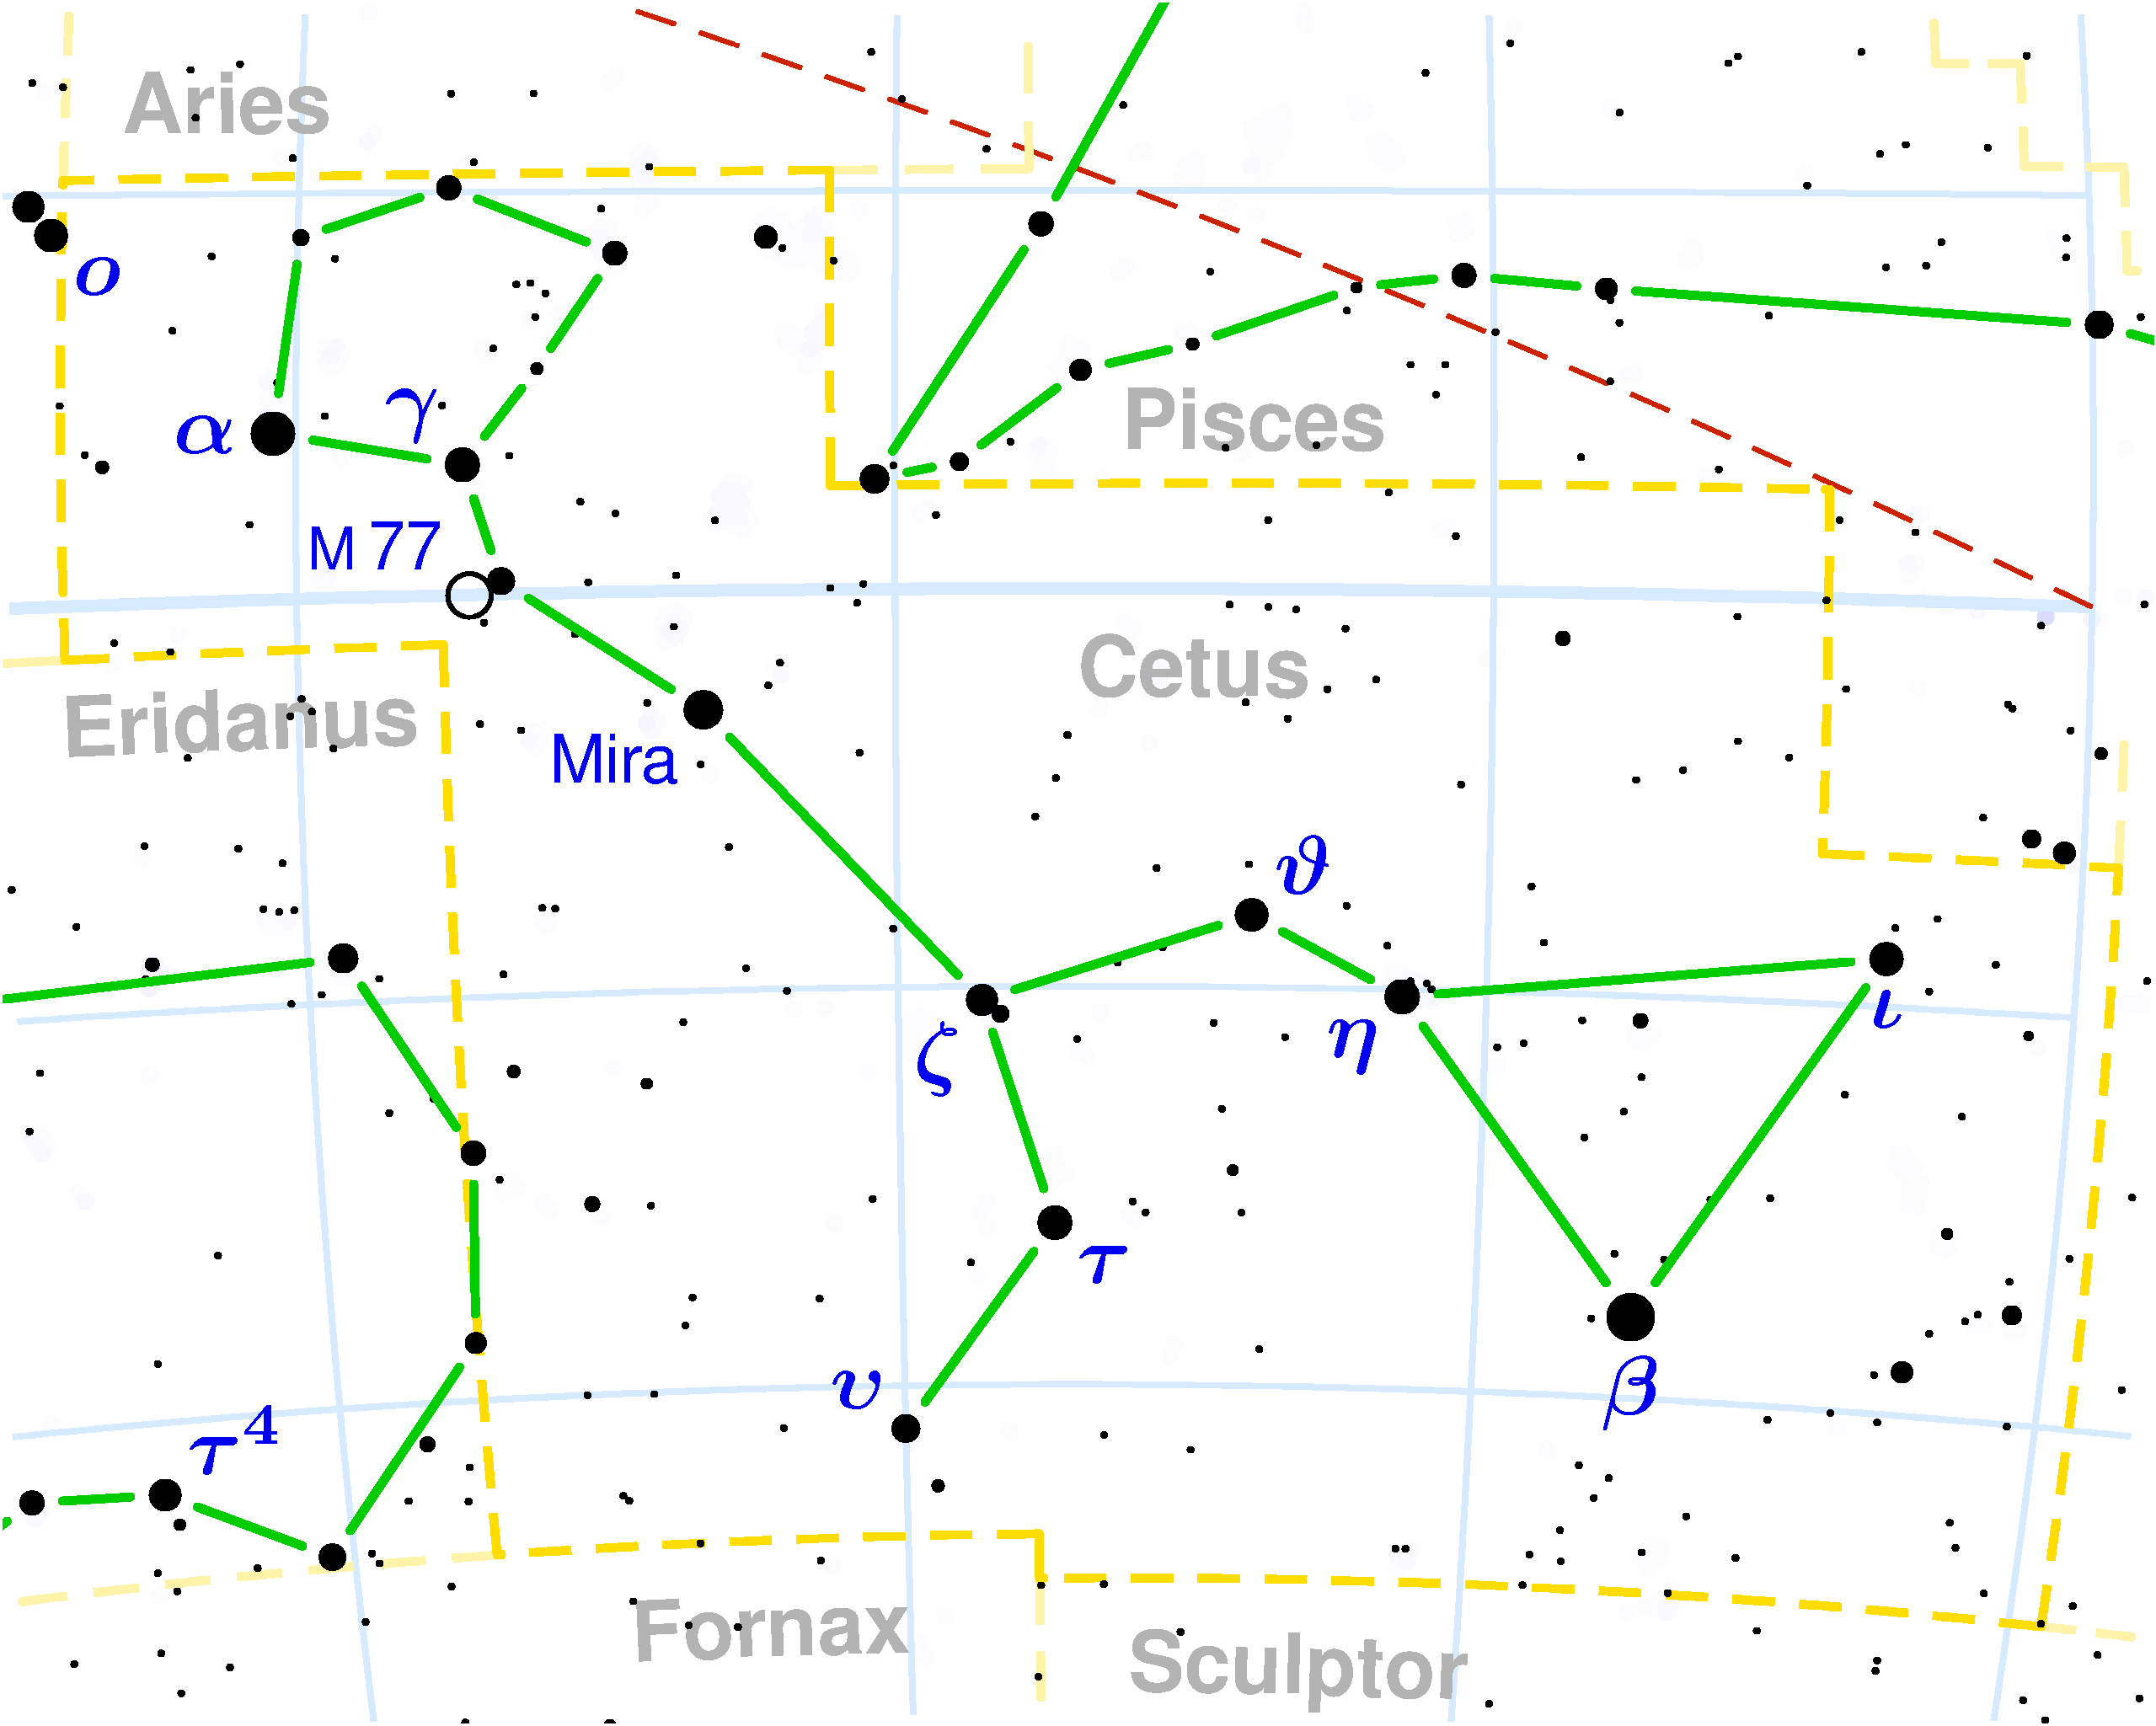 Stars in astrology - Wikipedia